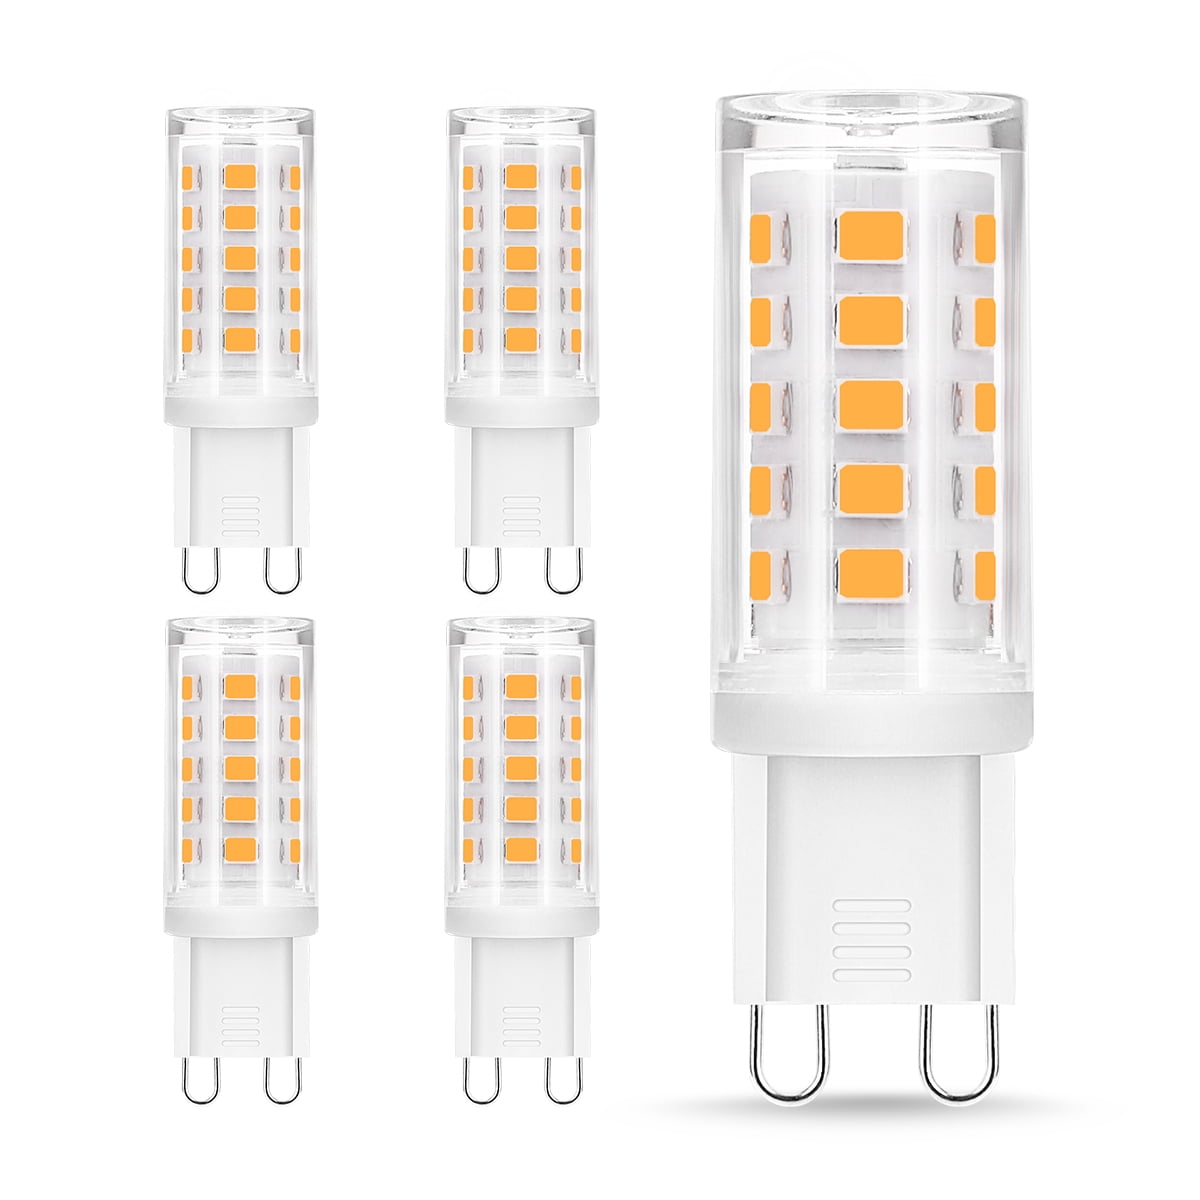 Non-dimmable G9 Base Bulbs G9 Ceramic Base LED Light Bulbs 4W Warm White 3000K G9 Warm White Bulbs for Home Lighting 40W Halogen Equivalent 450LM 5 Pack 